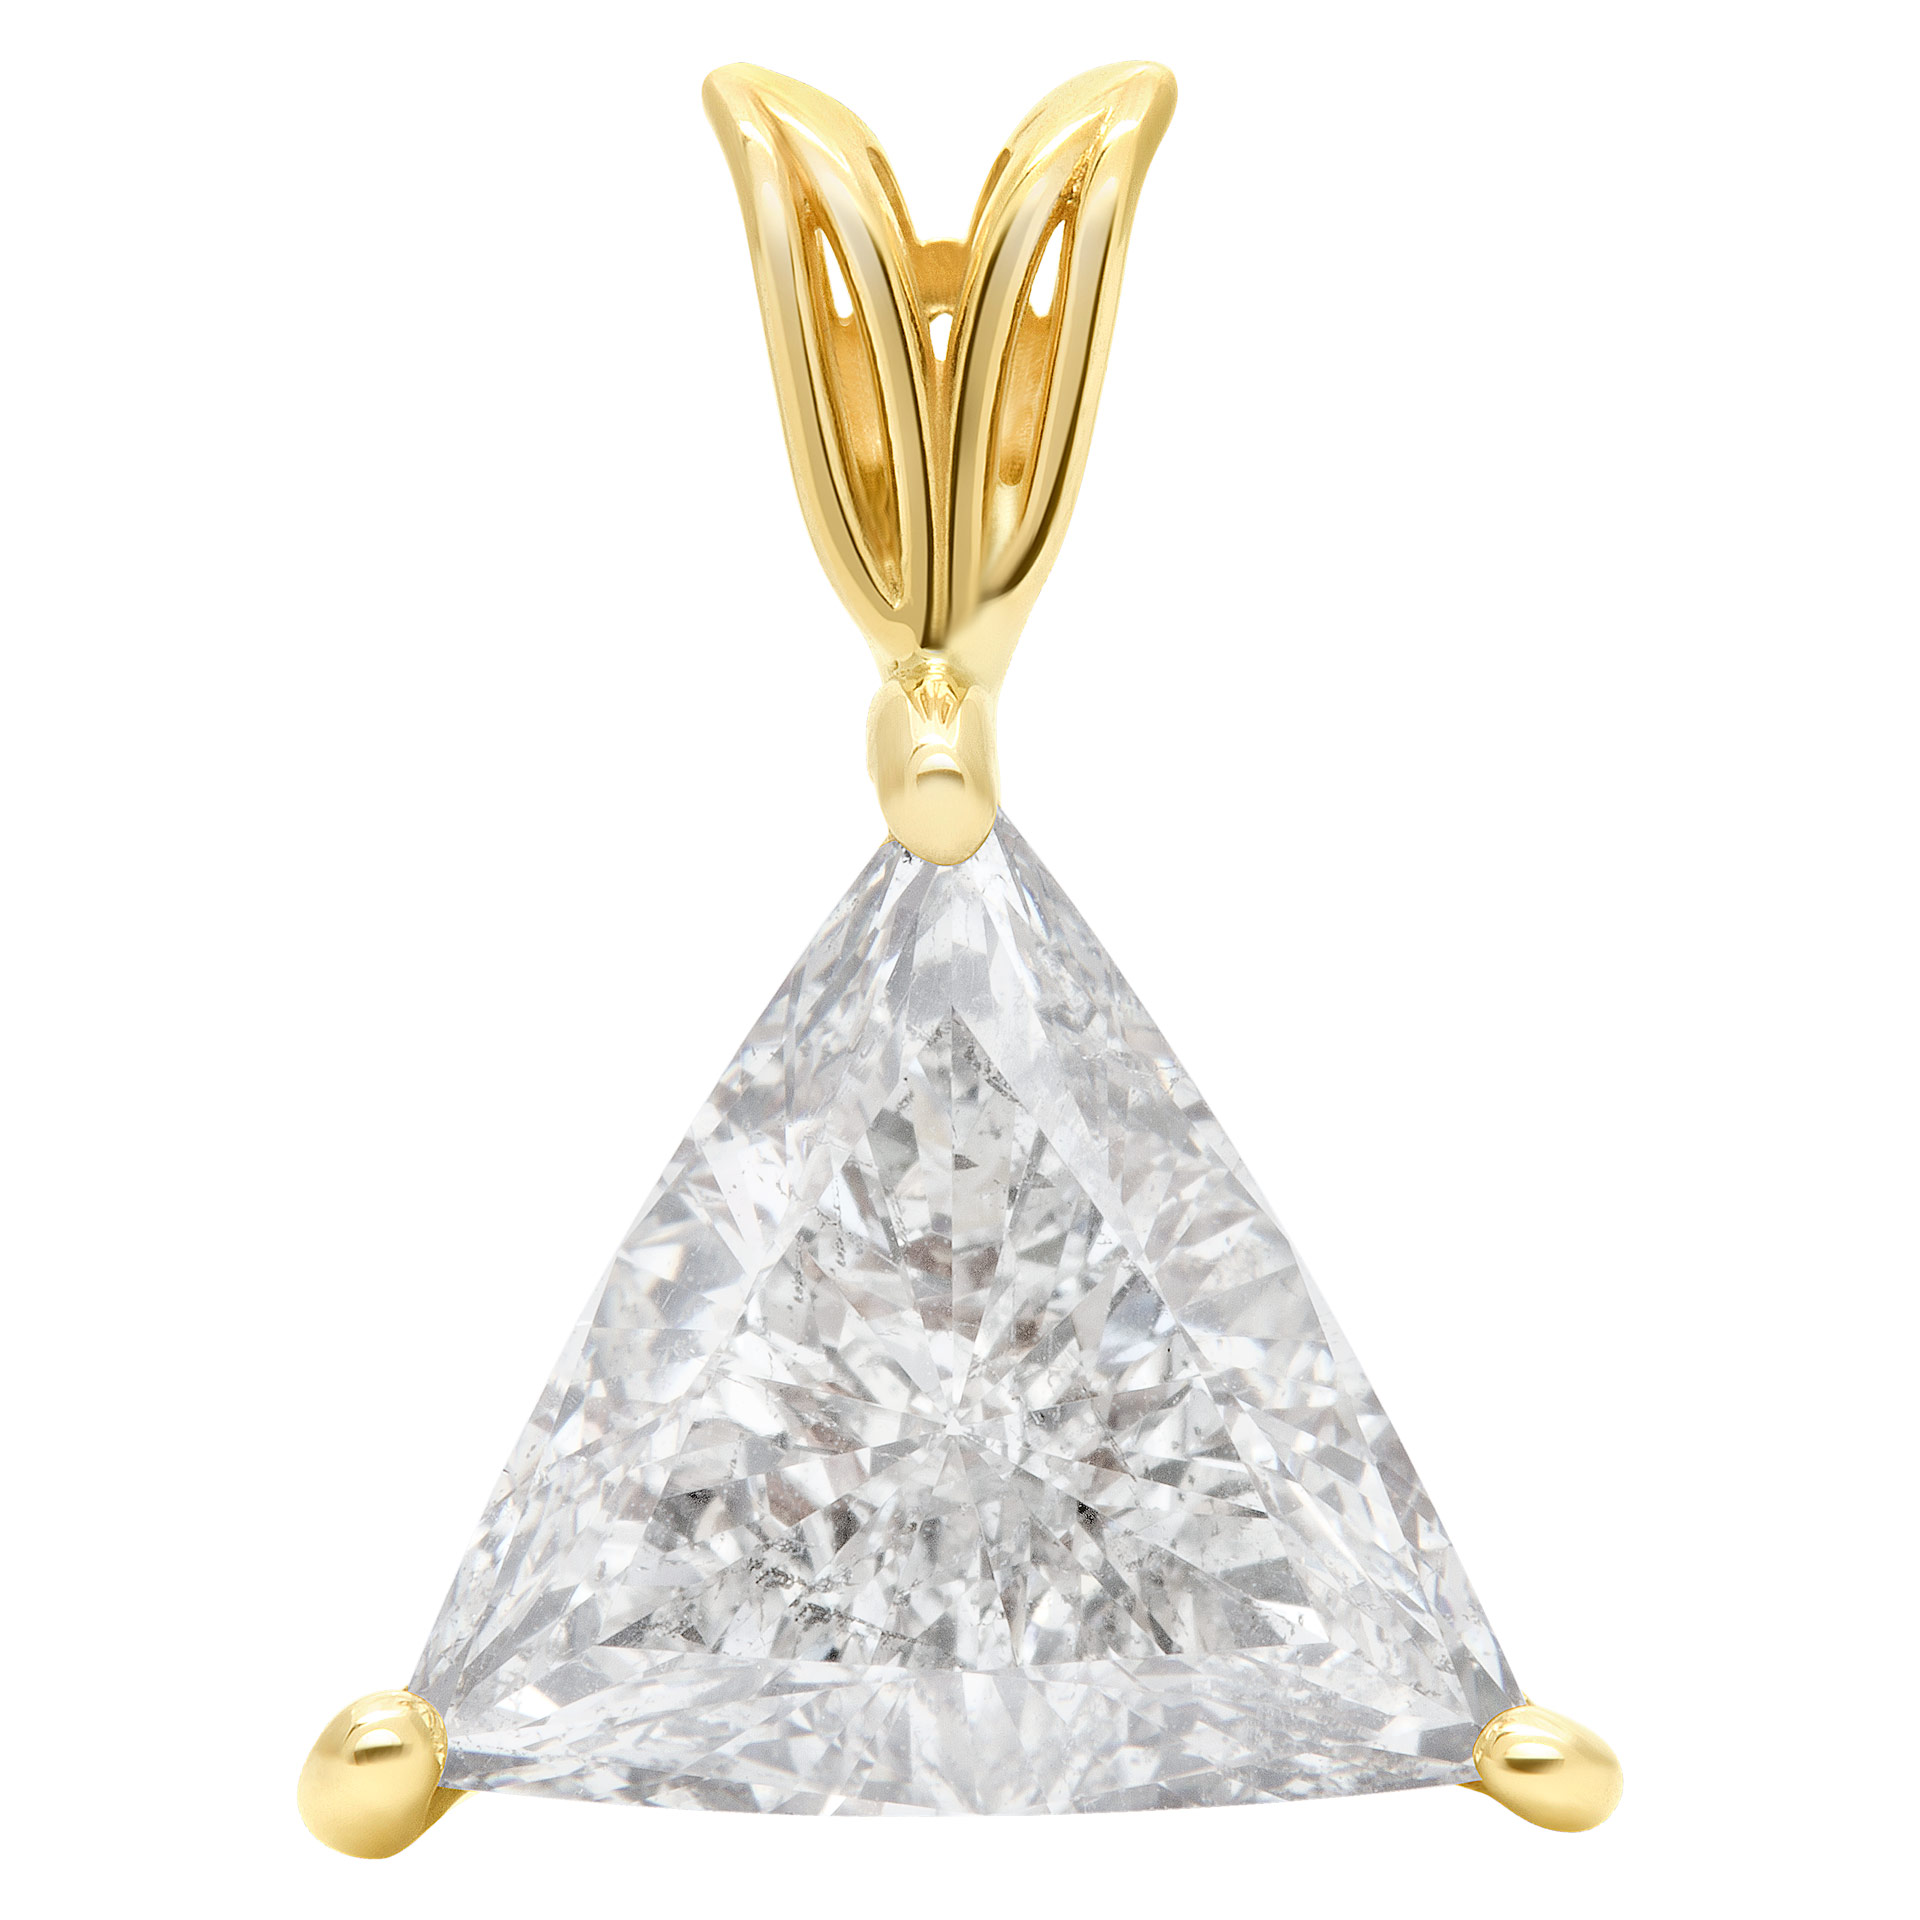 GIA certified trianguler cut diamond 2.49 carat (H color, SI 2 clarity) pendant